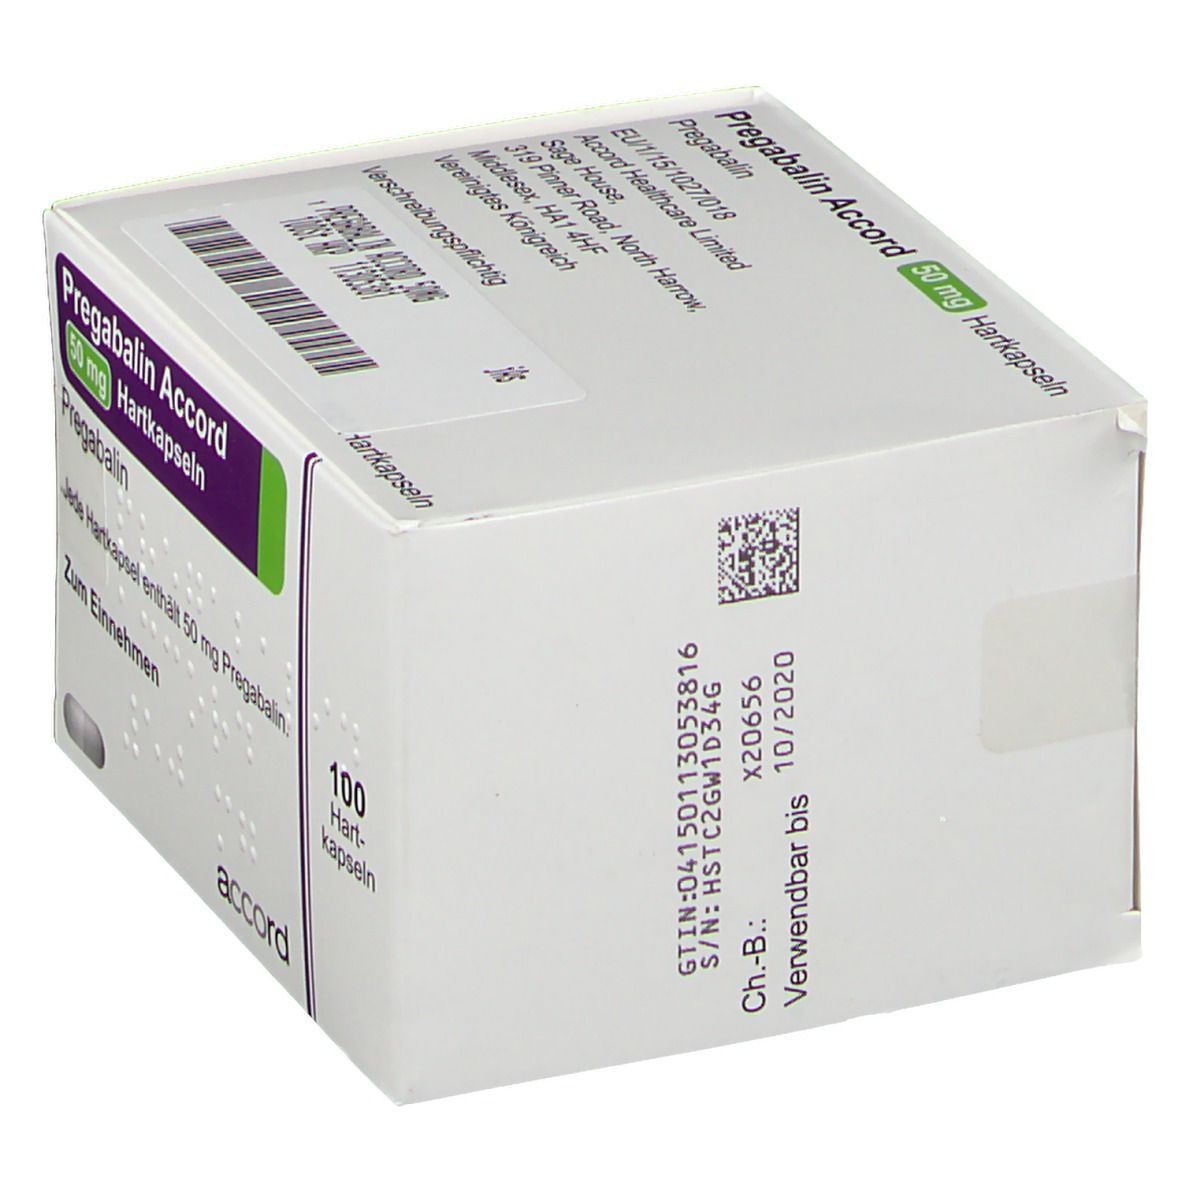 Pregabalin Accord 50 mg